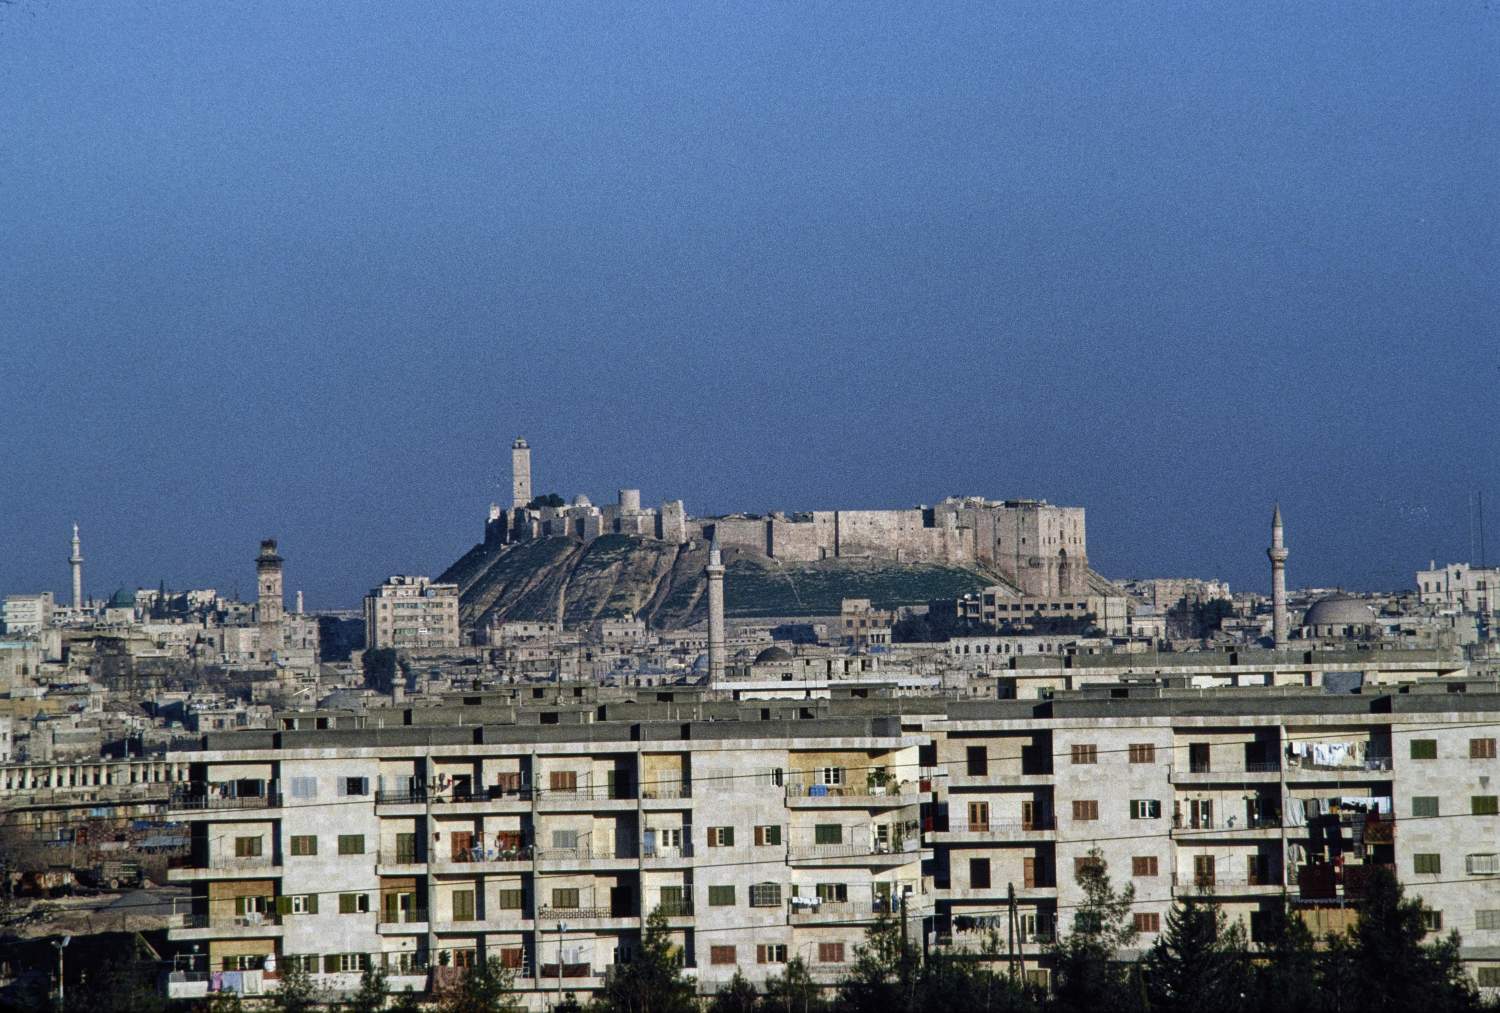 General view over city toward citadel, facing east.